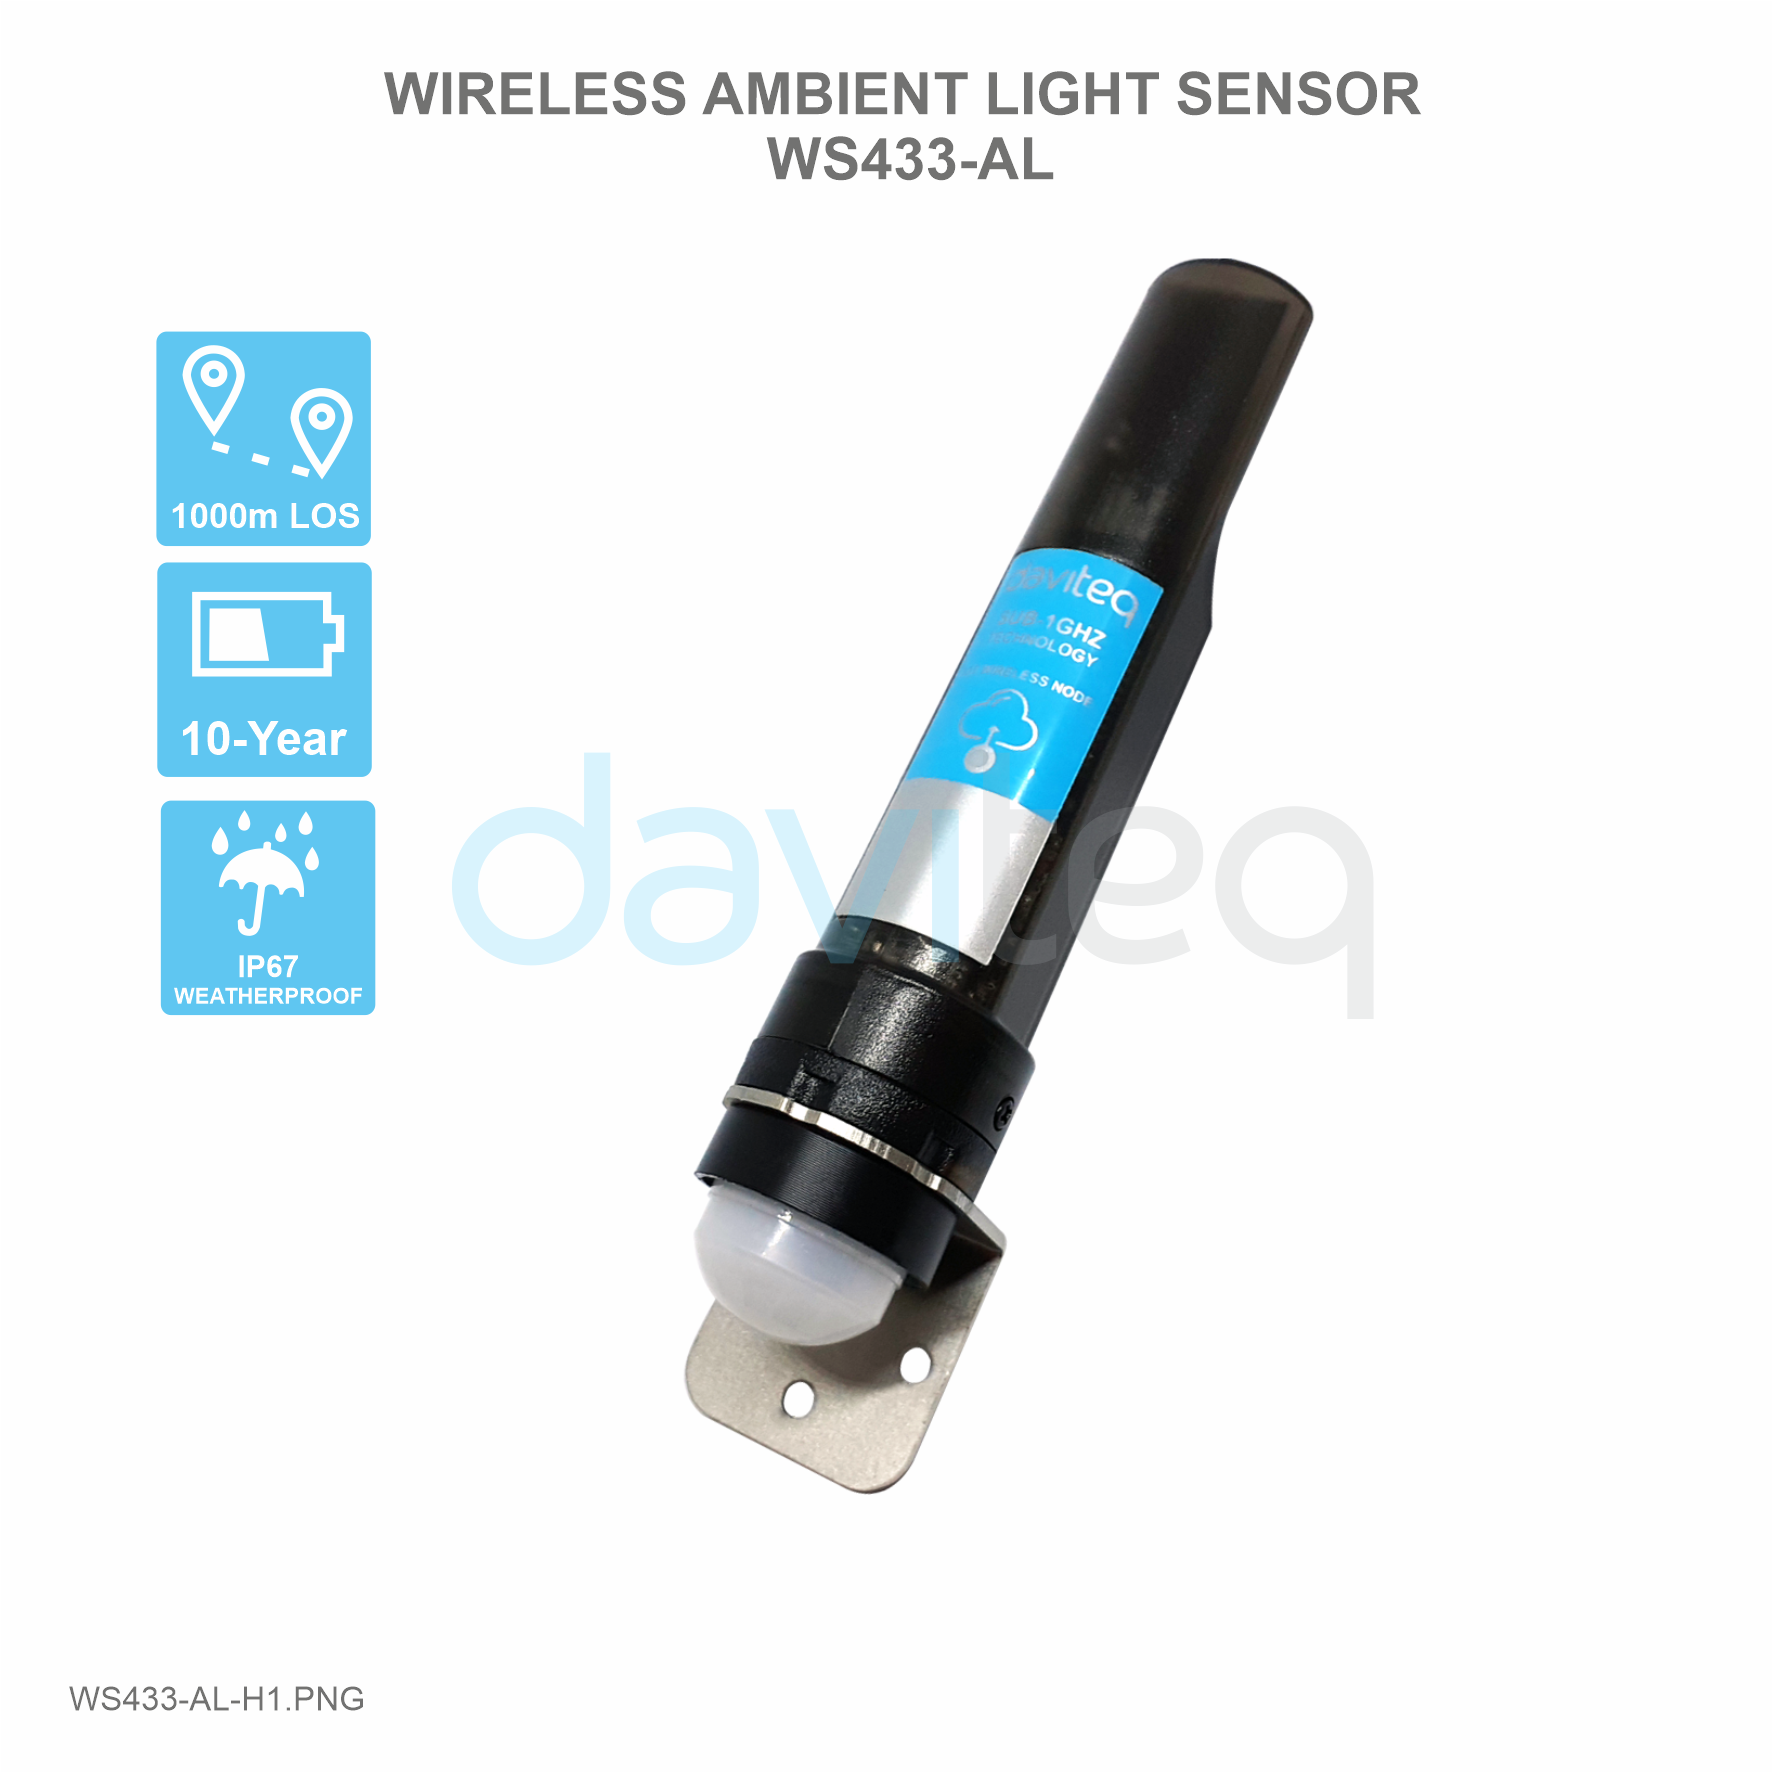 Wireless ambient light sensor